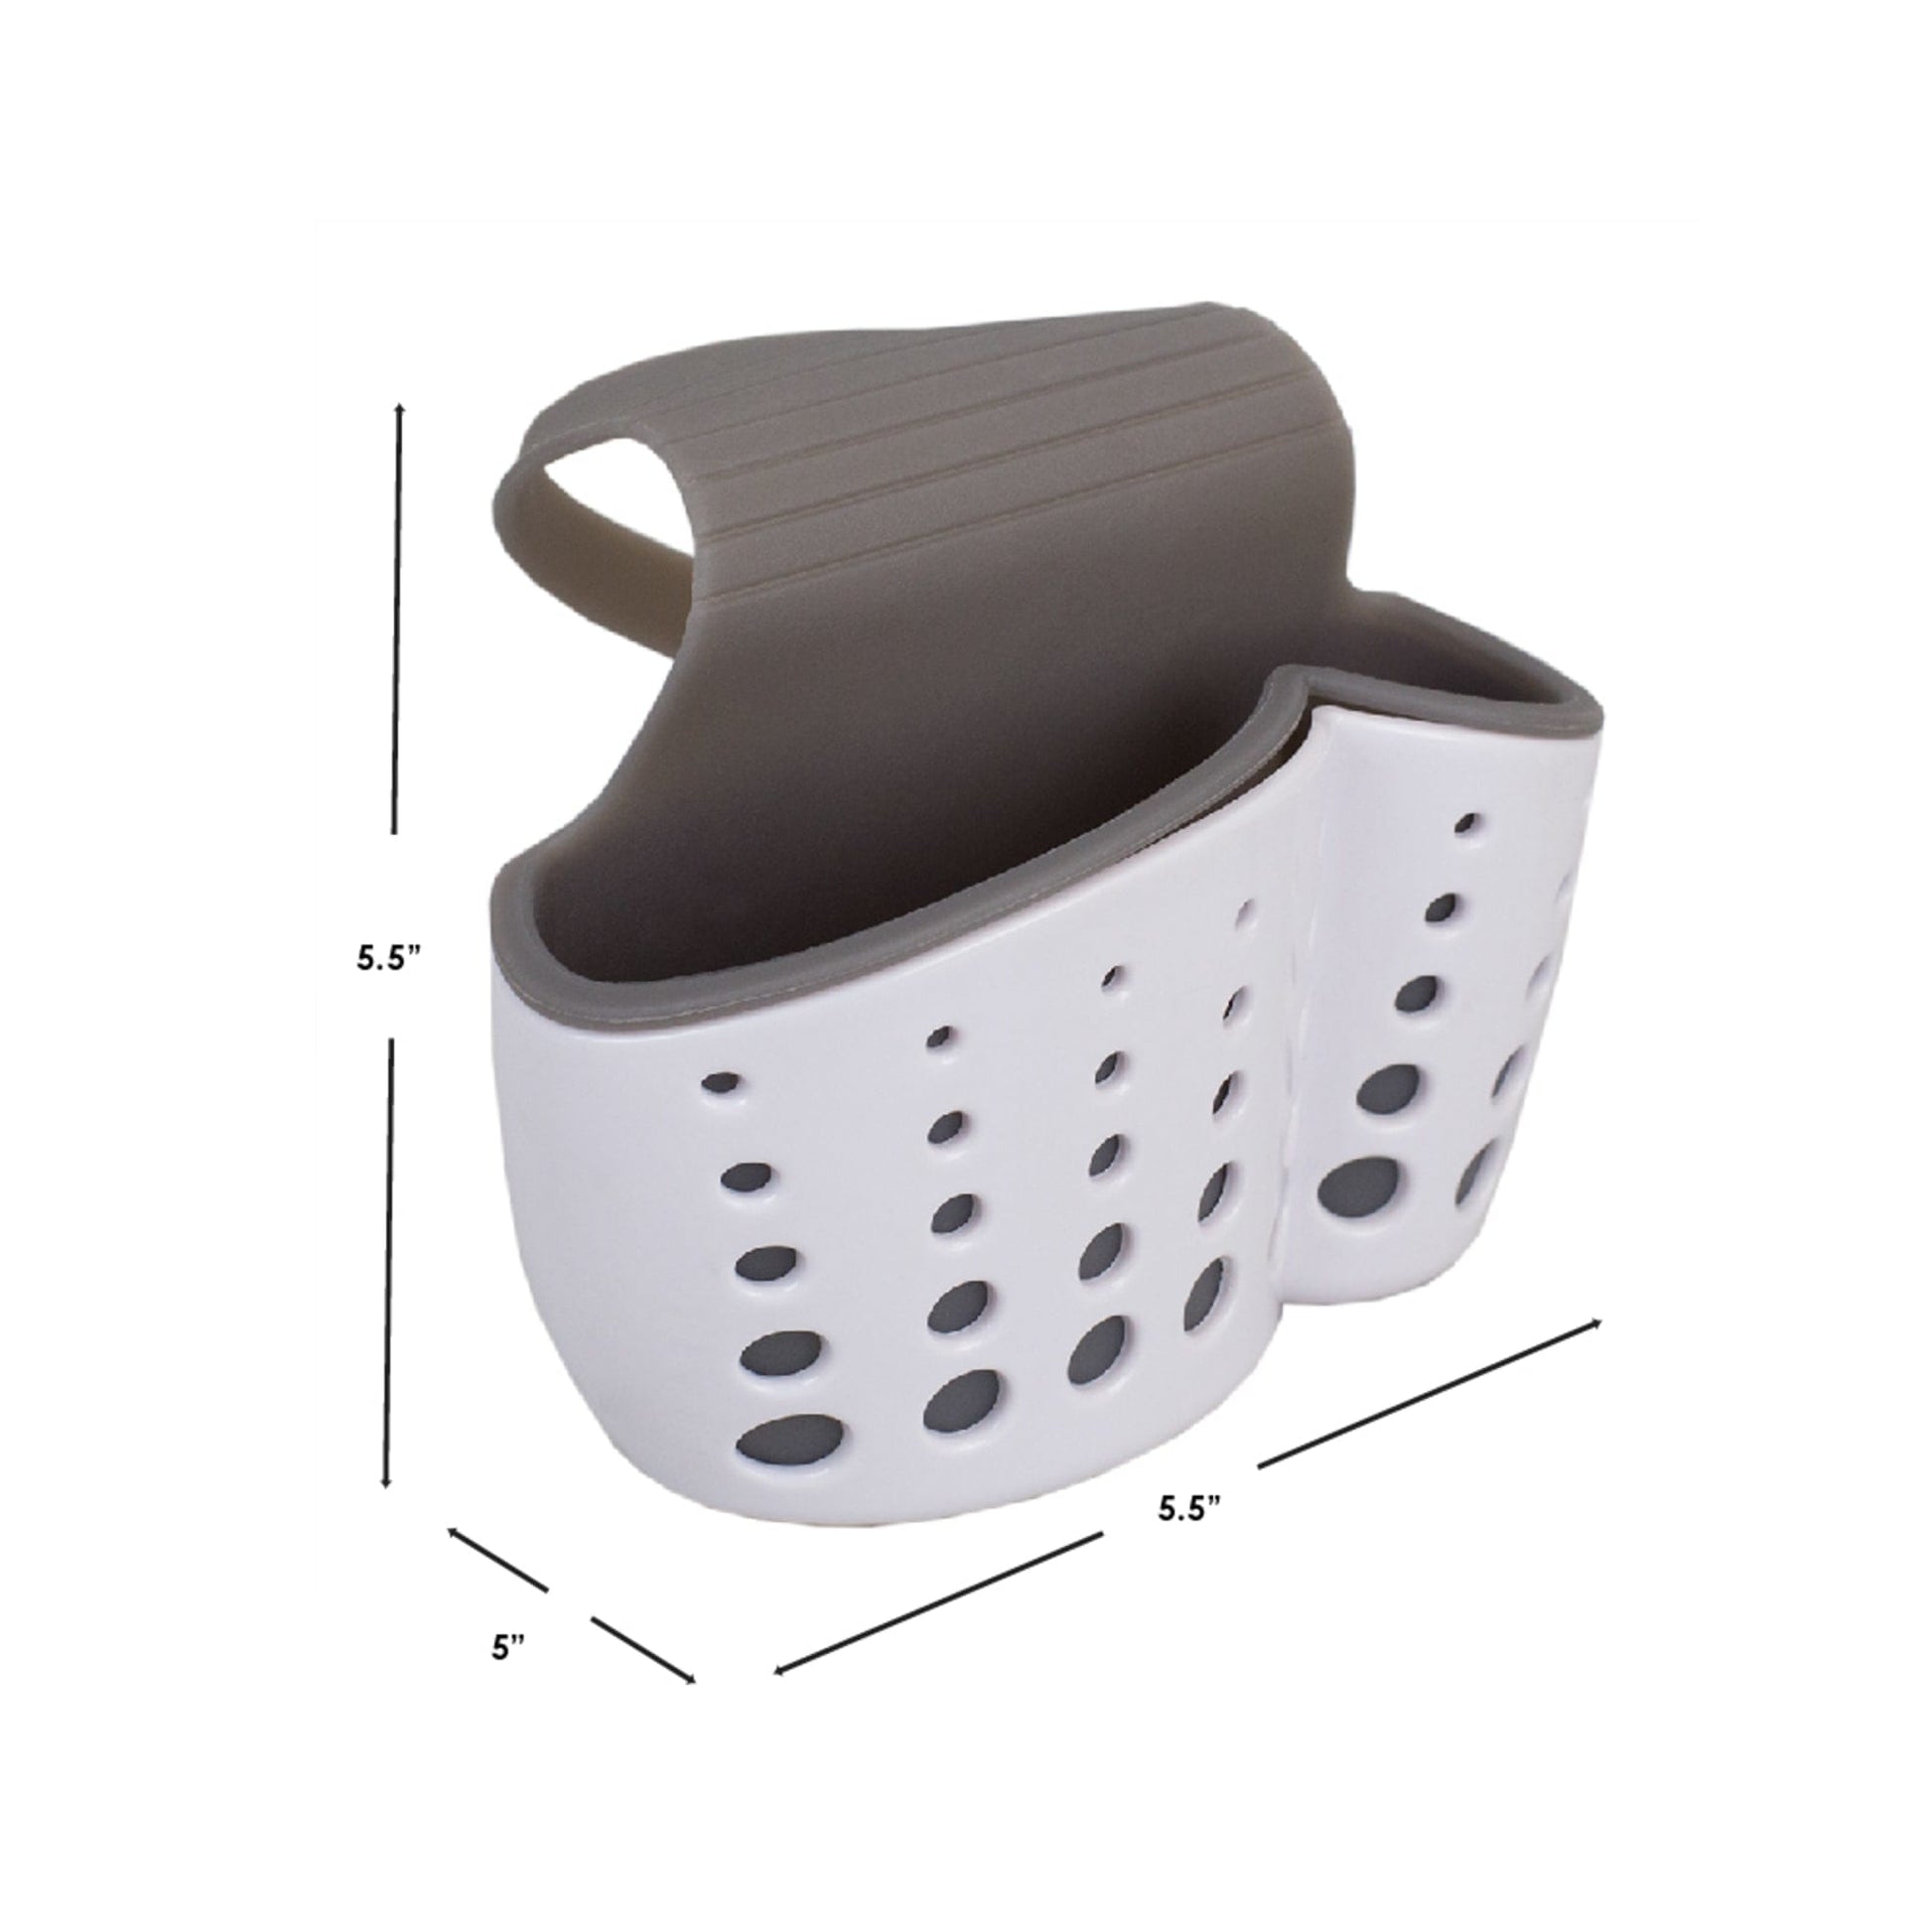 Sponge & dishwand holder caddy — Clear! — Self-draining! — Swivels! — Free  USA shipping